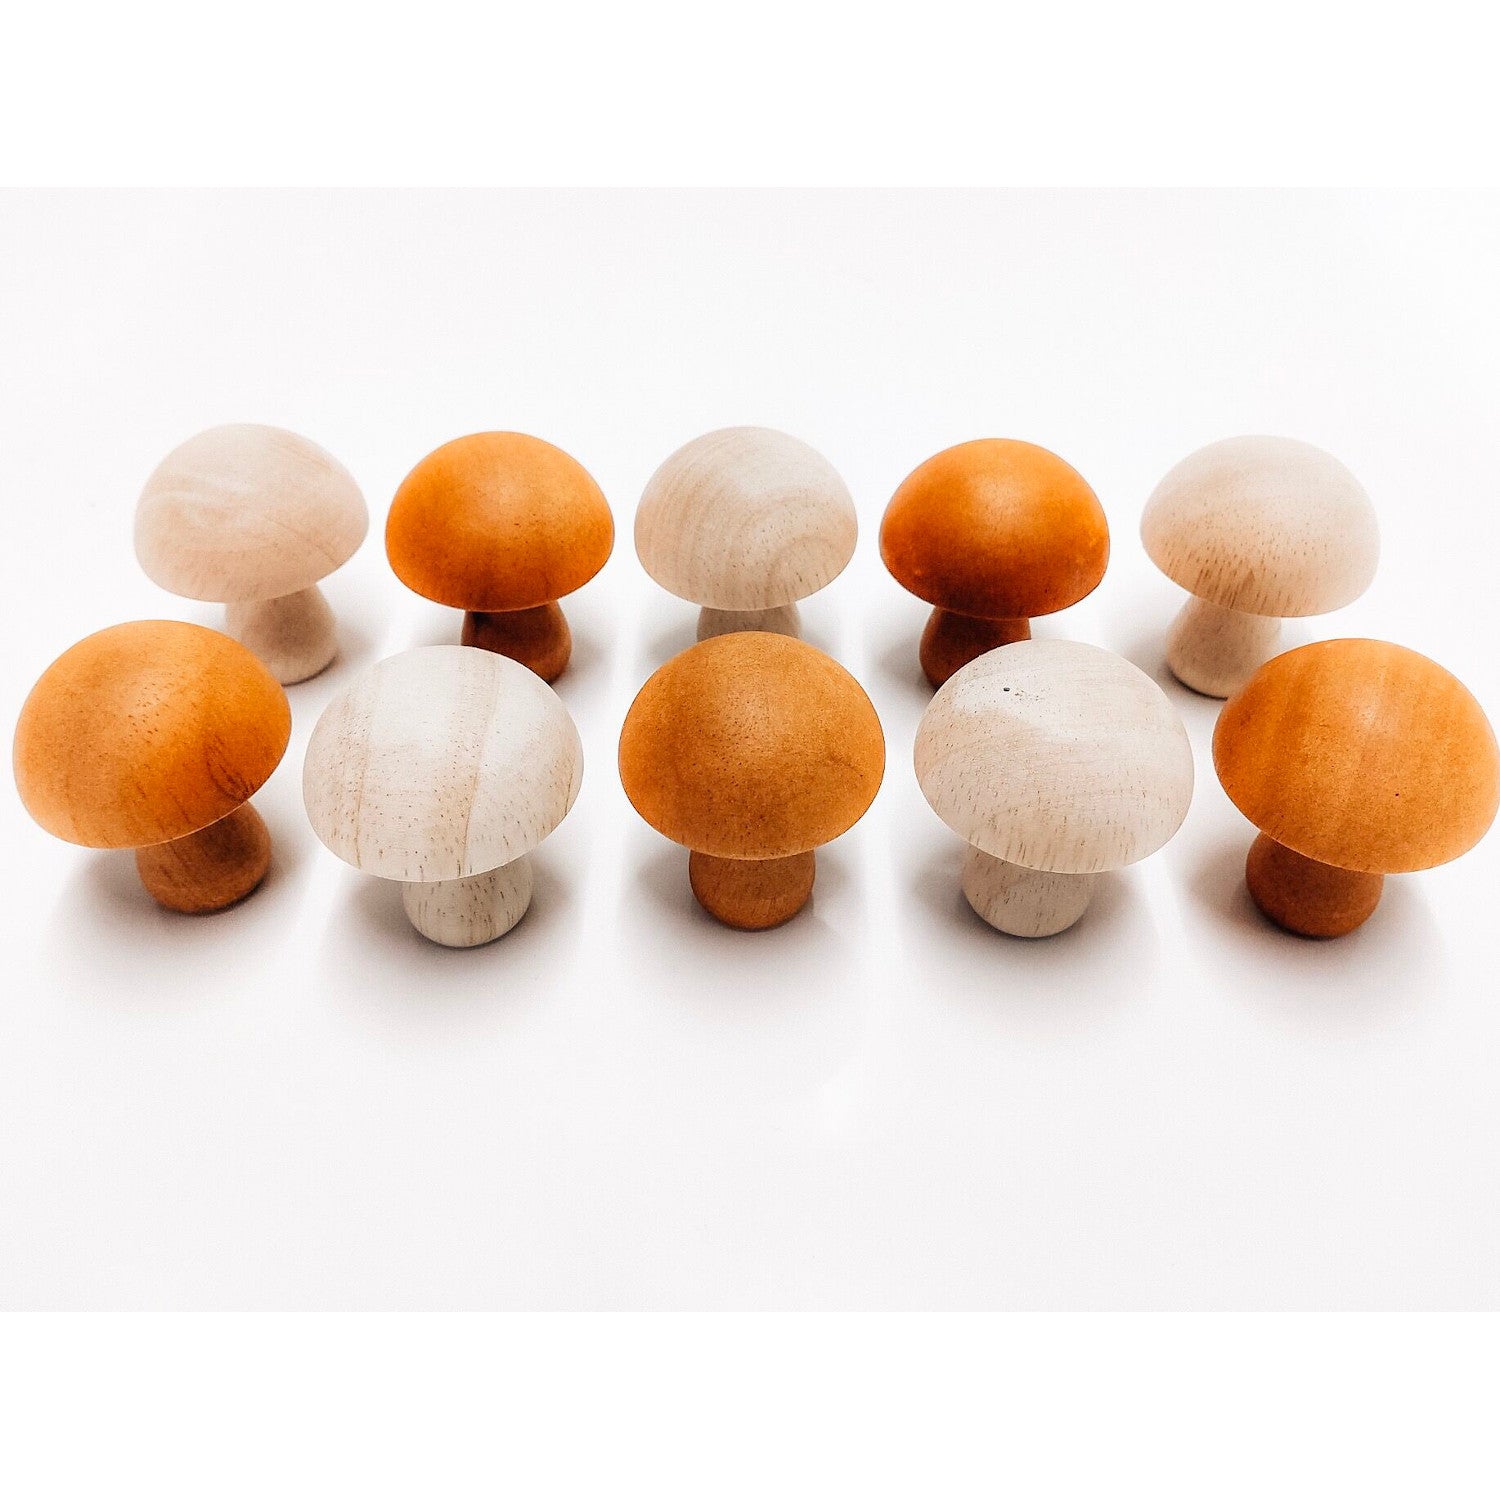 Qtoys Mushrooms, with balls and bowls